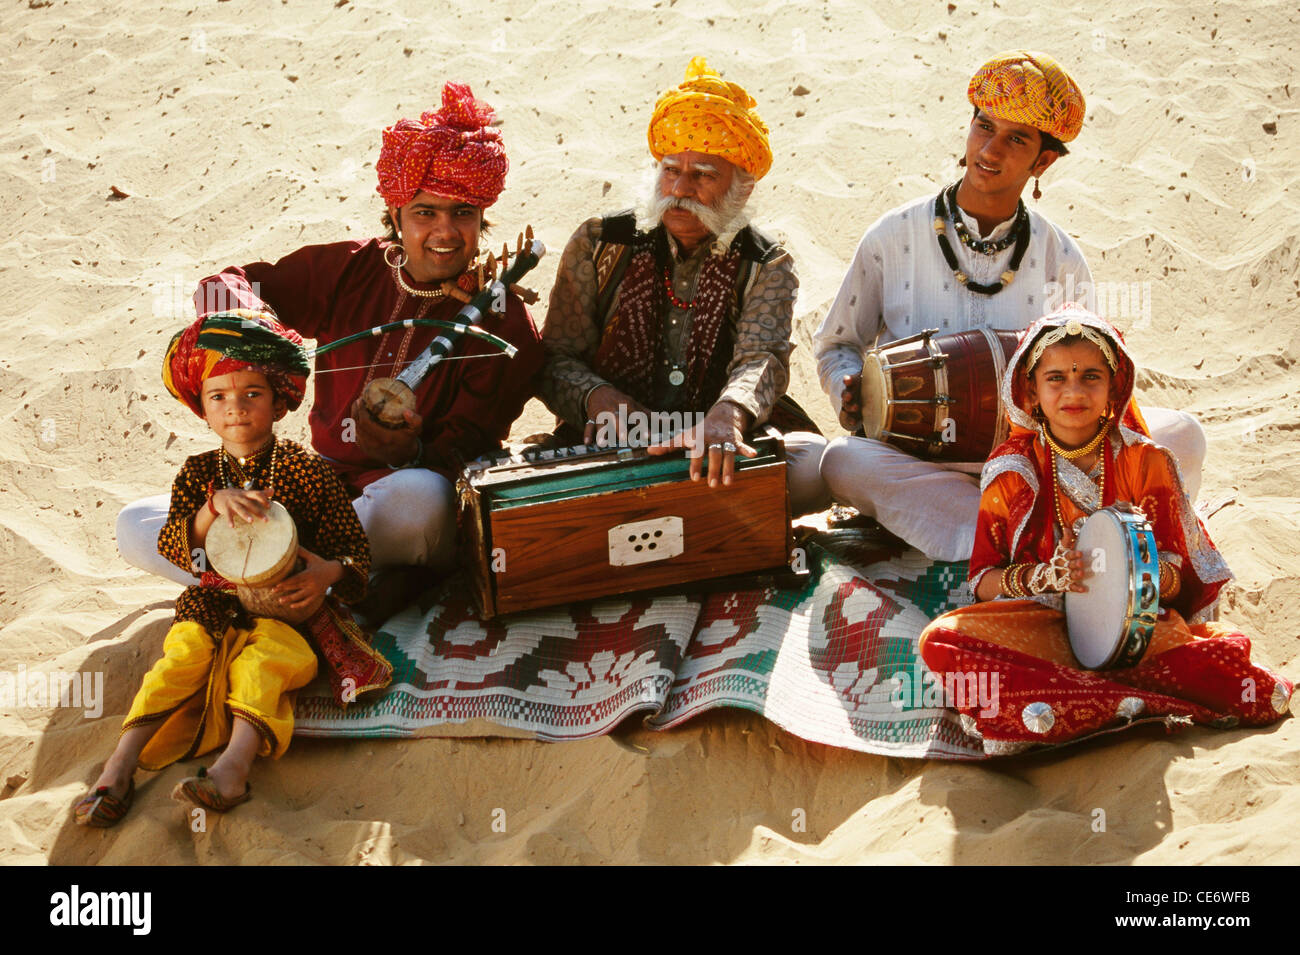 BDR 83398 : rajasthani folk musicians family playing harmonium violin drums in desert sand rajasthan india  MR#657B Stock Photo